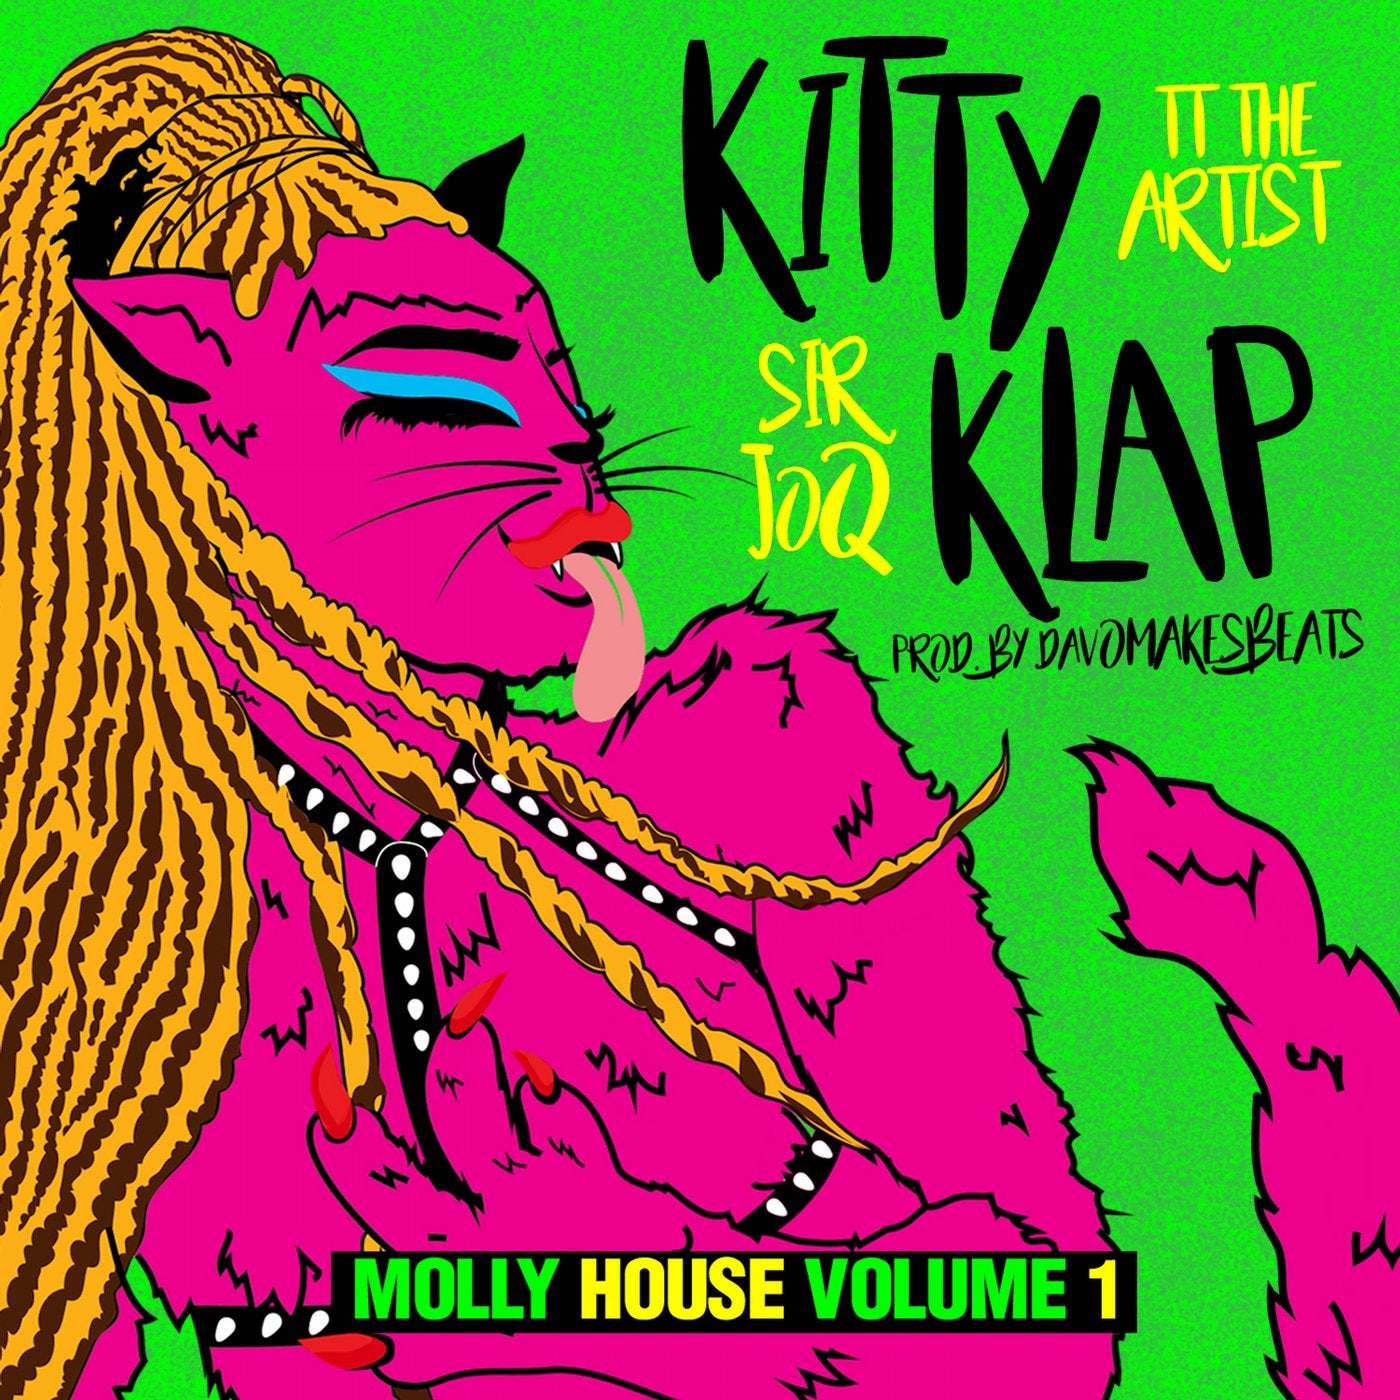 Kitty Klap (feat. TT the Artist & Sir JoQ)